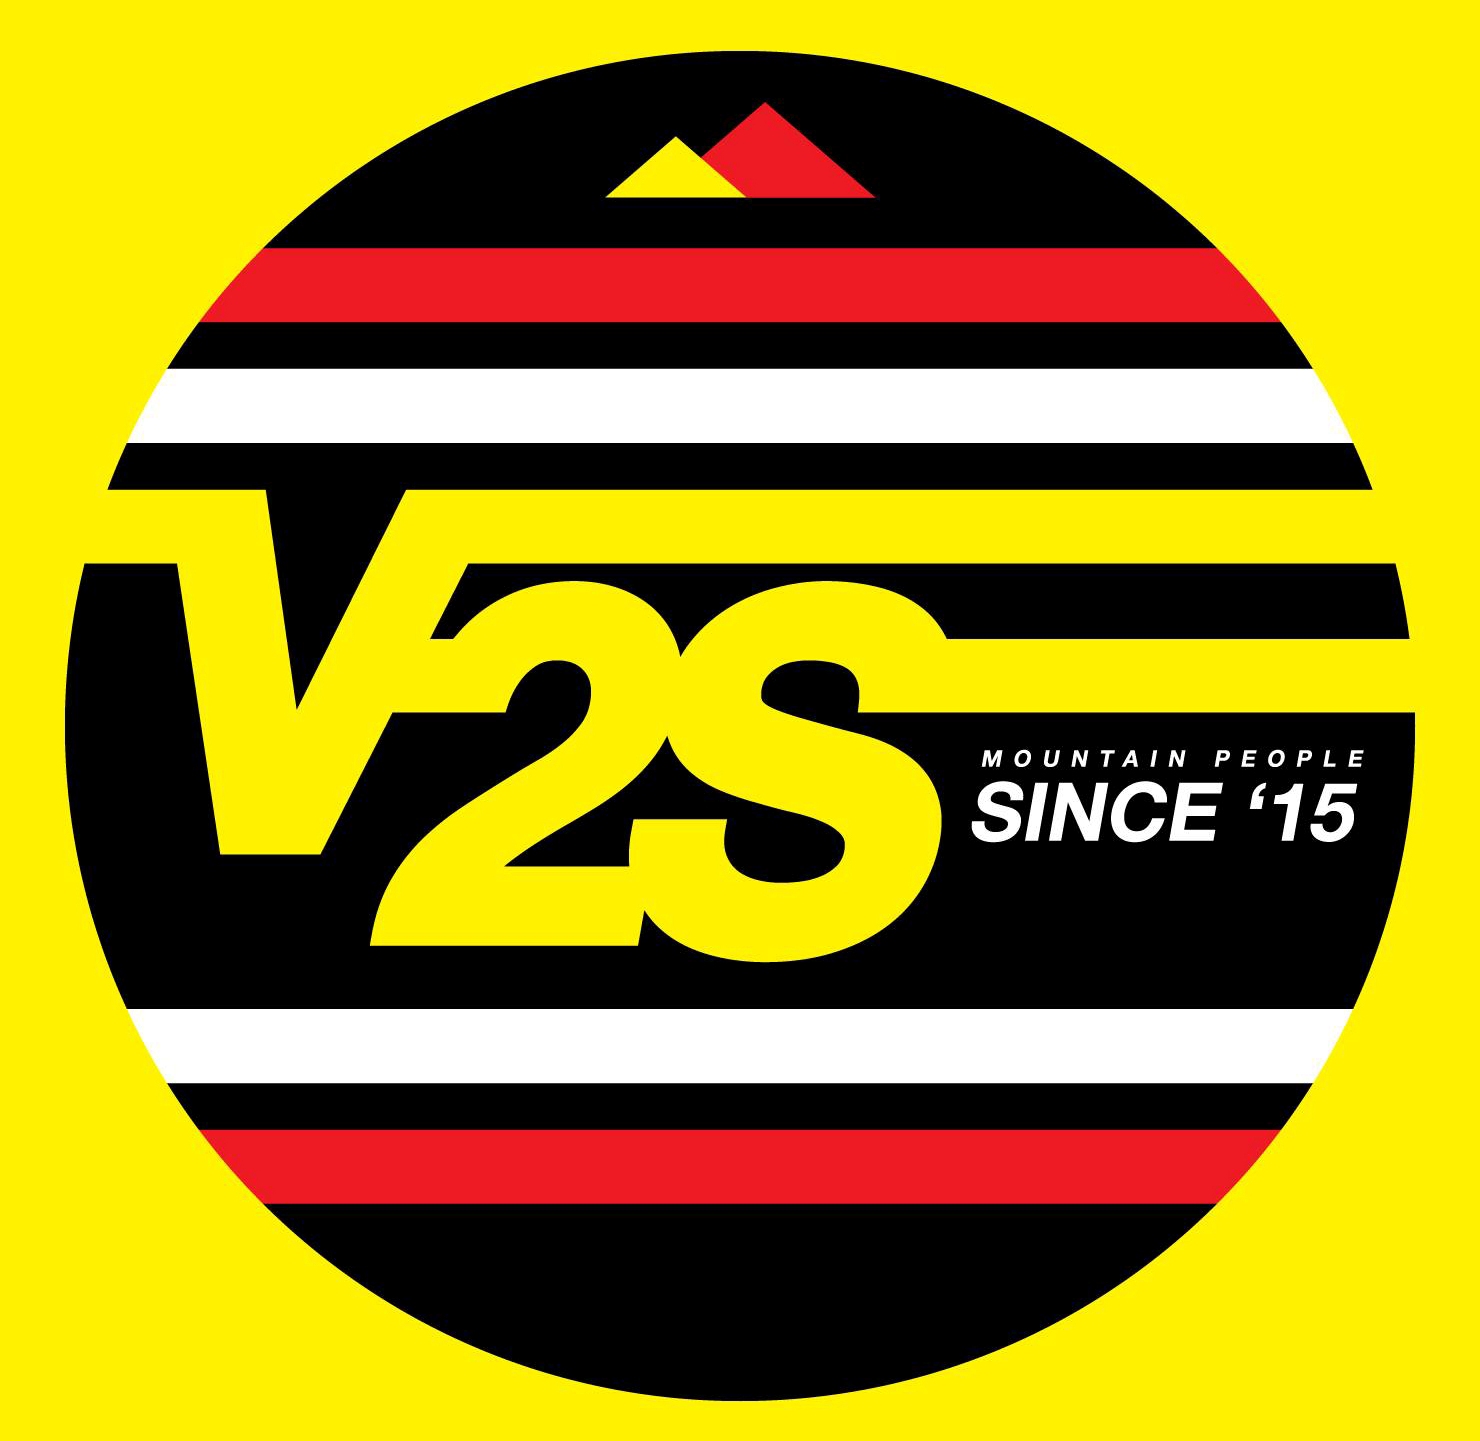 Vertical To Sky logo 2022